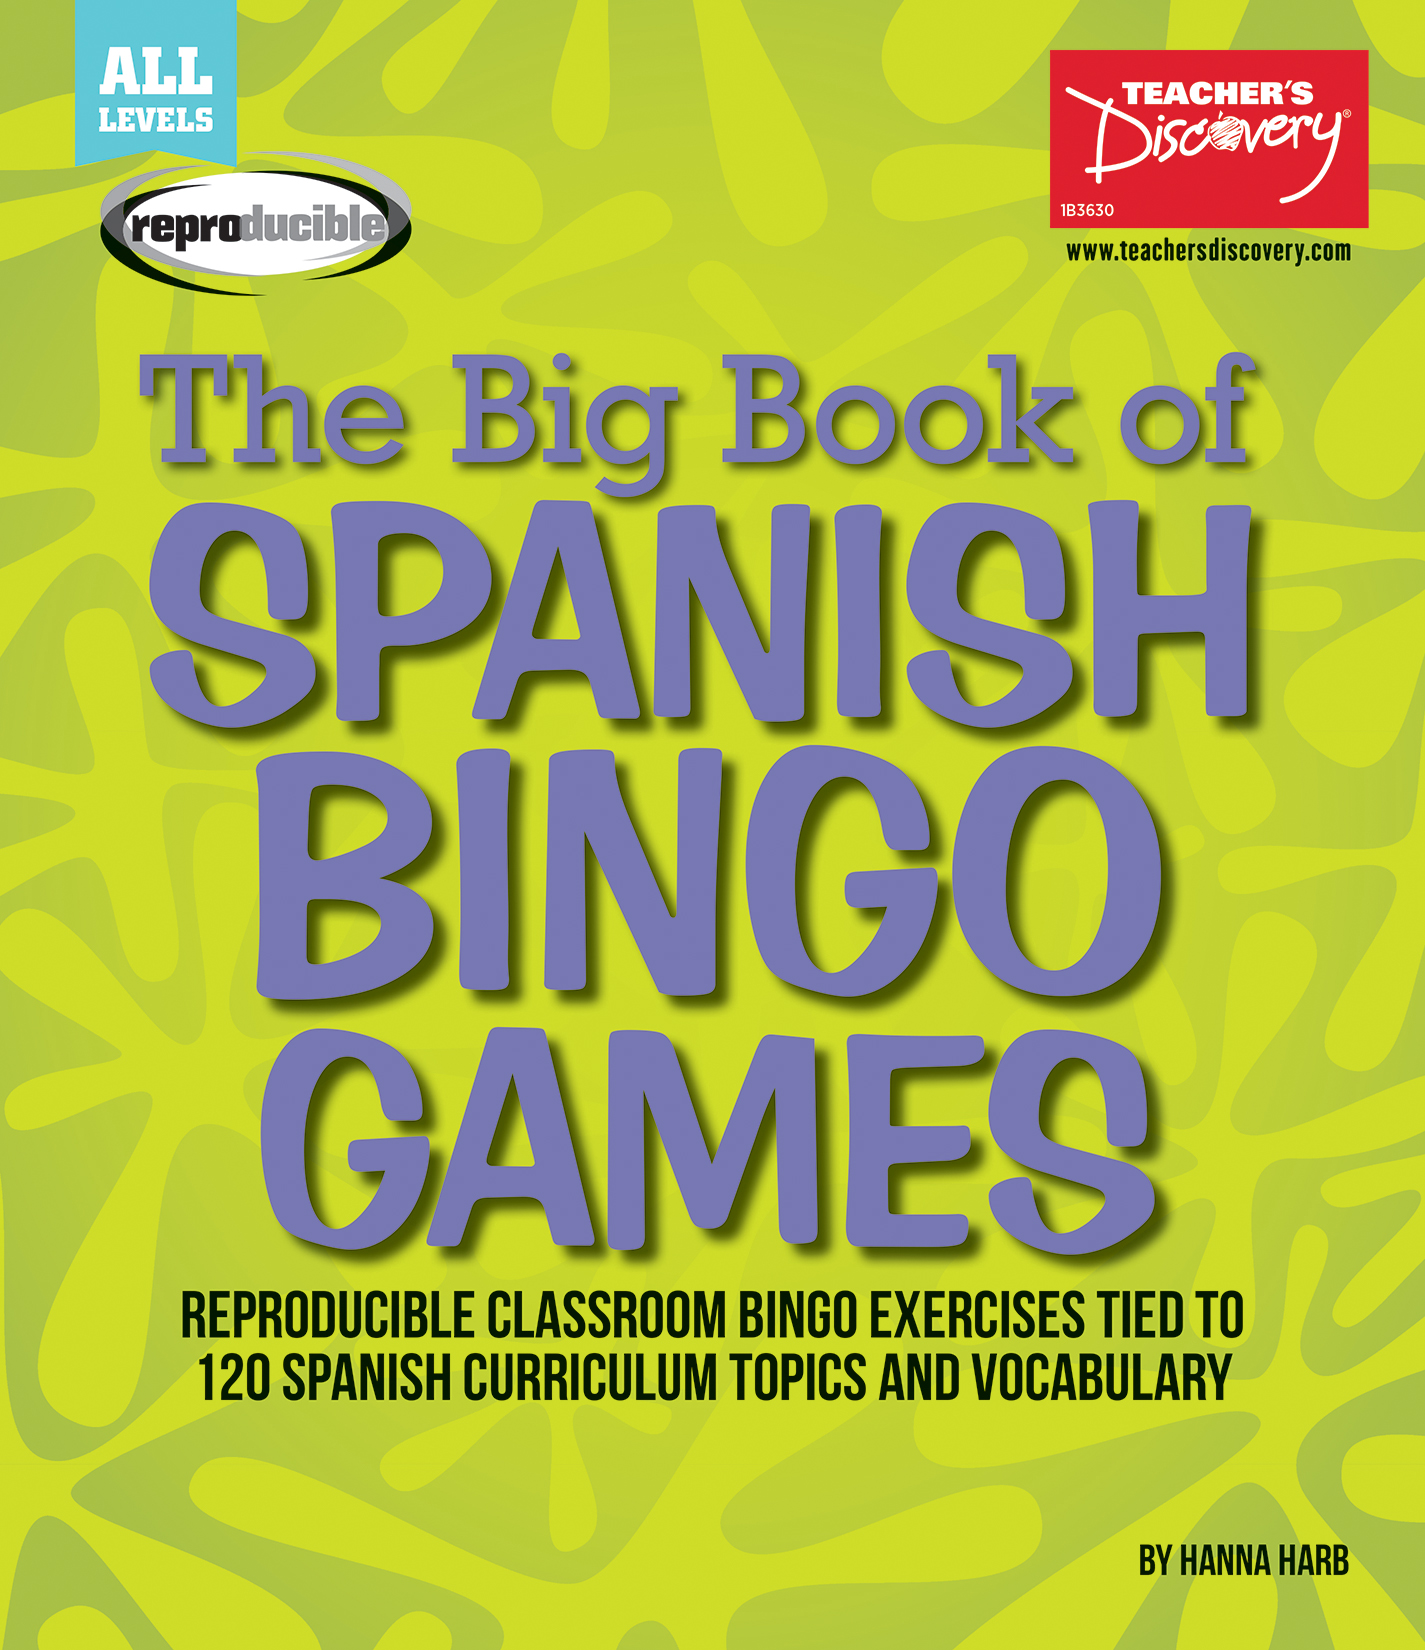 The Big Book of Spanish Bingo Games